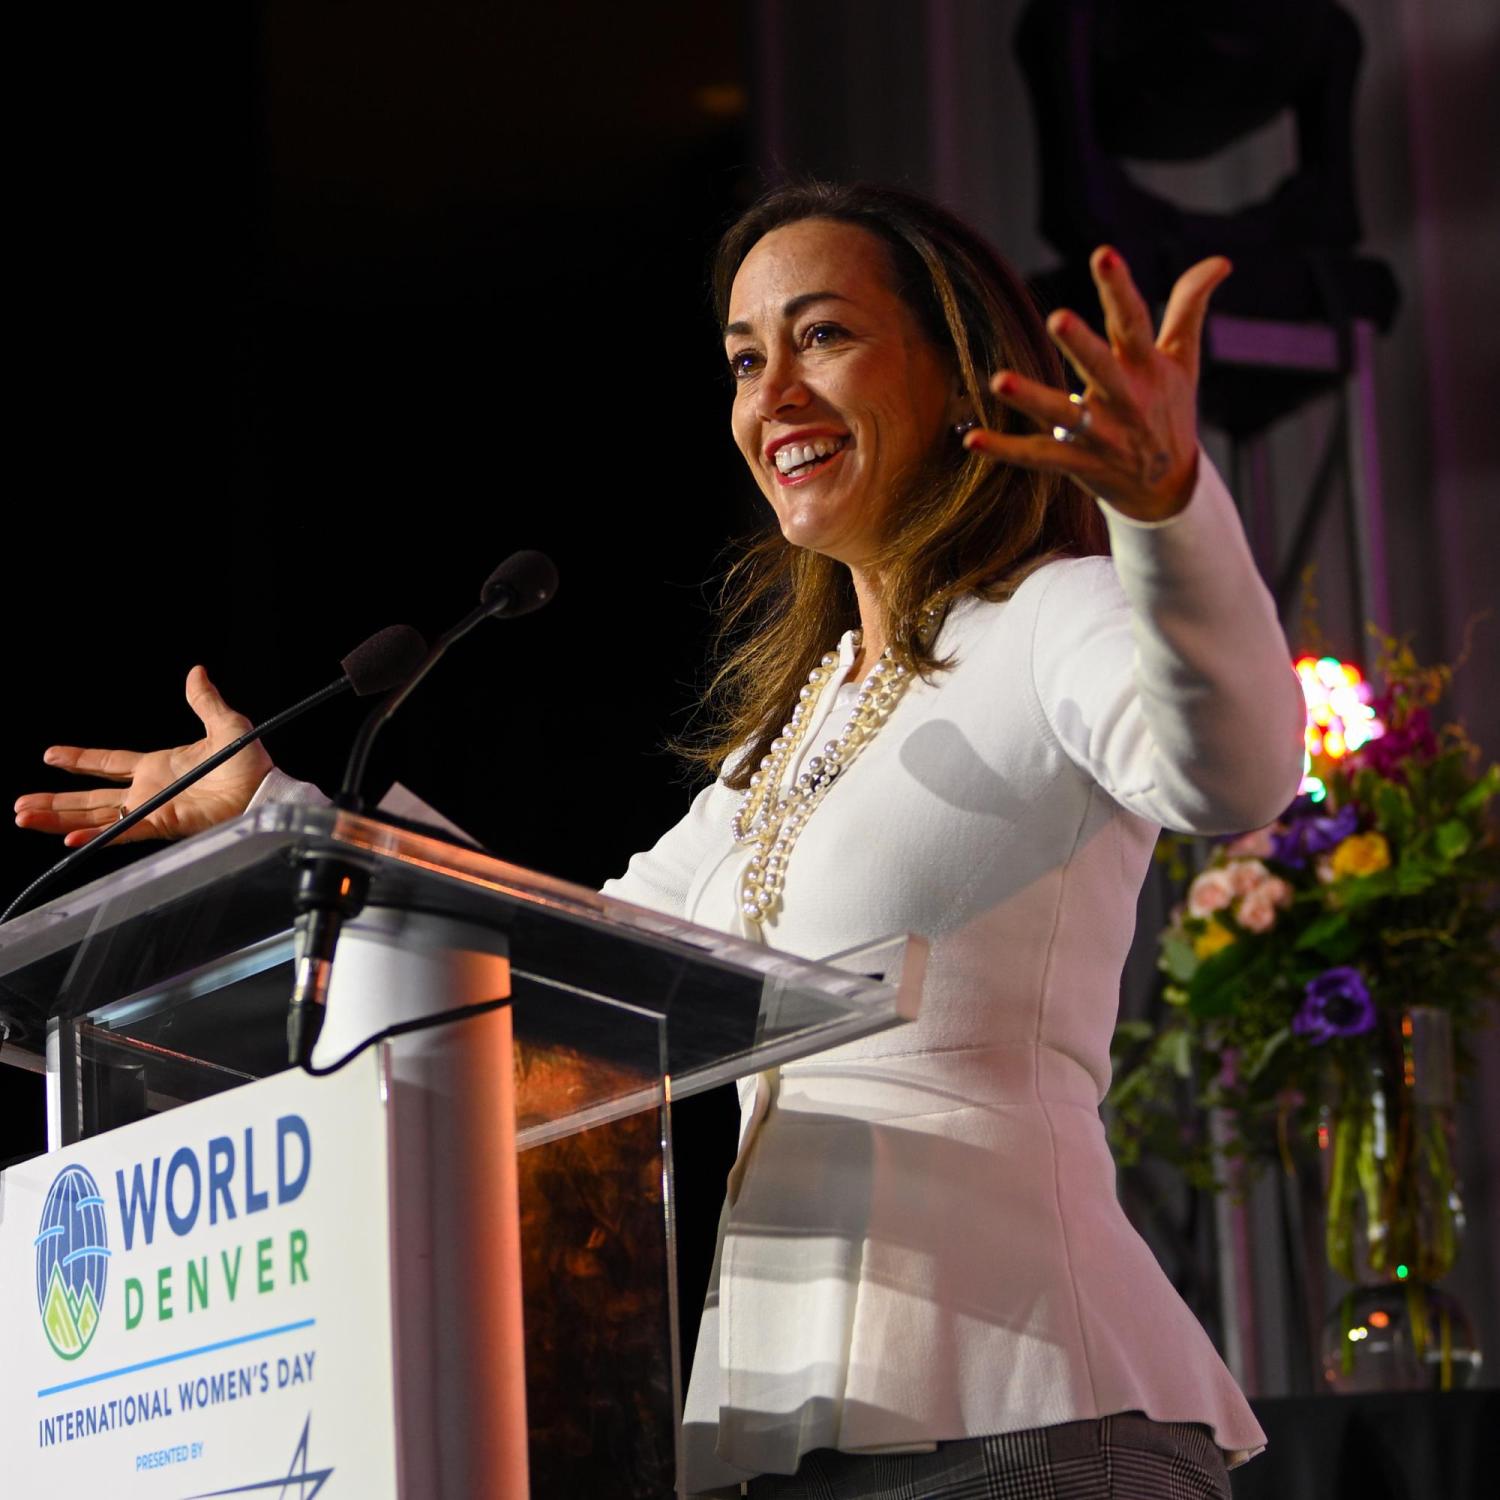 Janine Davidson speaking at the World Denver International Women's Day event